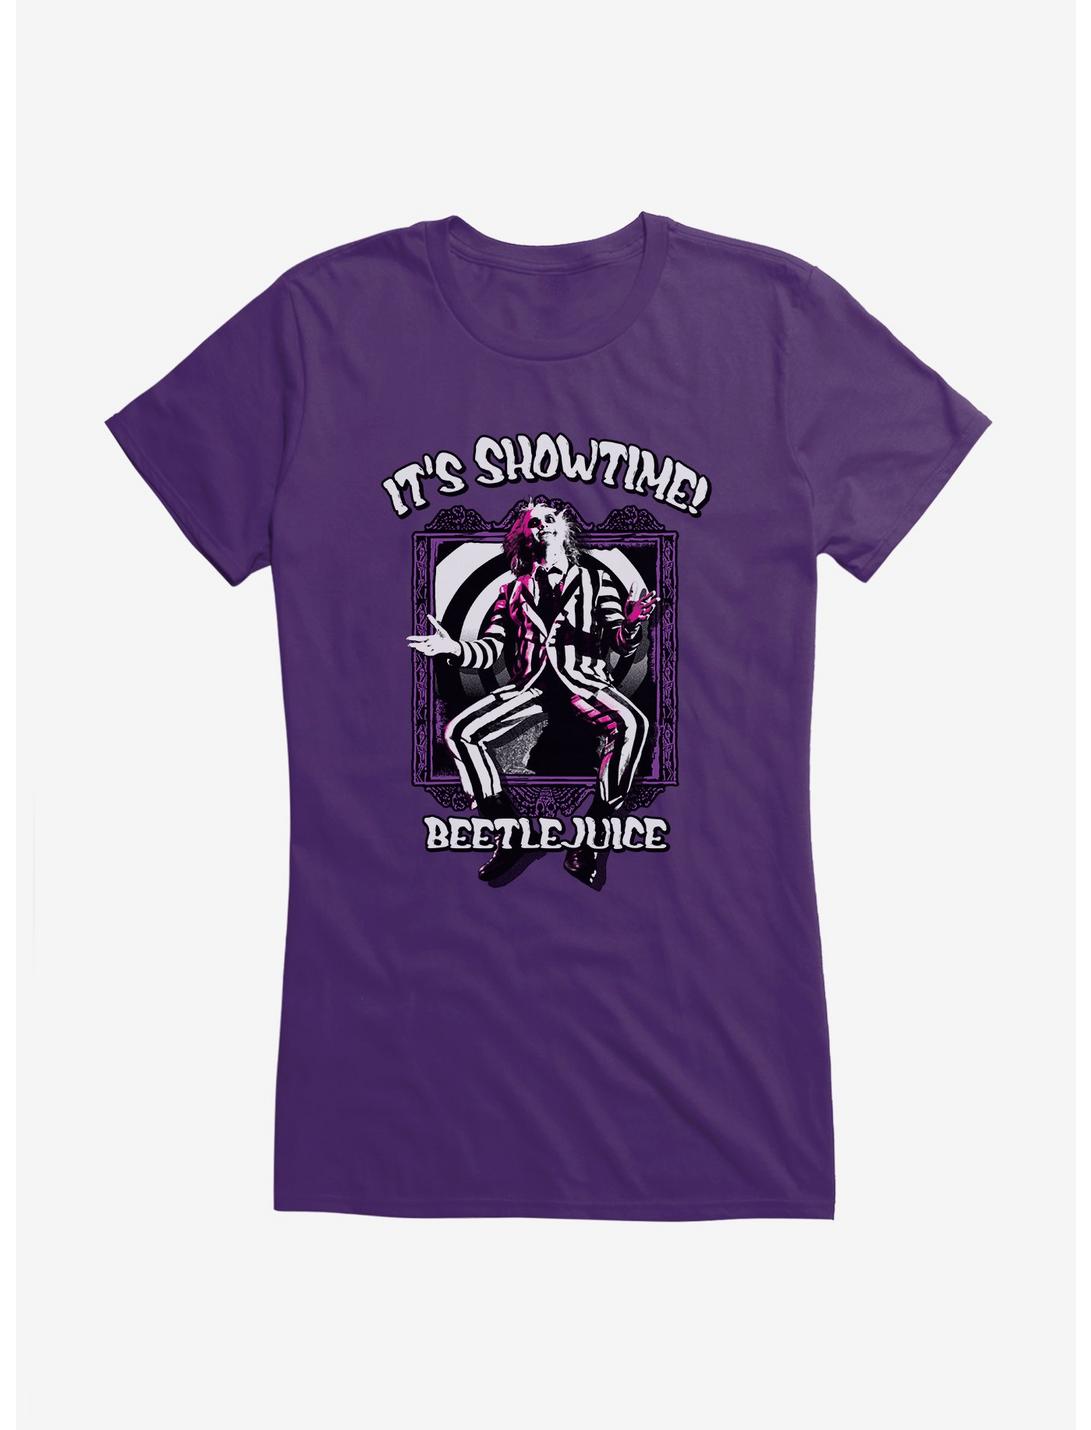 Beetlejuice It's Showtime! Girls T-Shirt, , hi-res